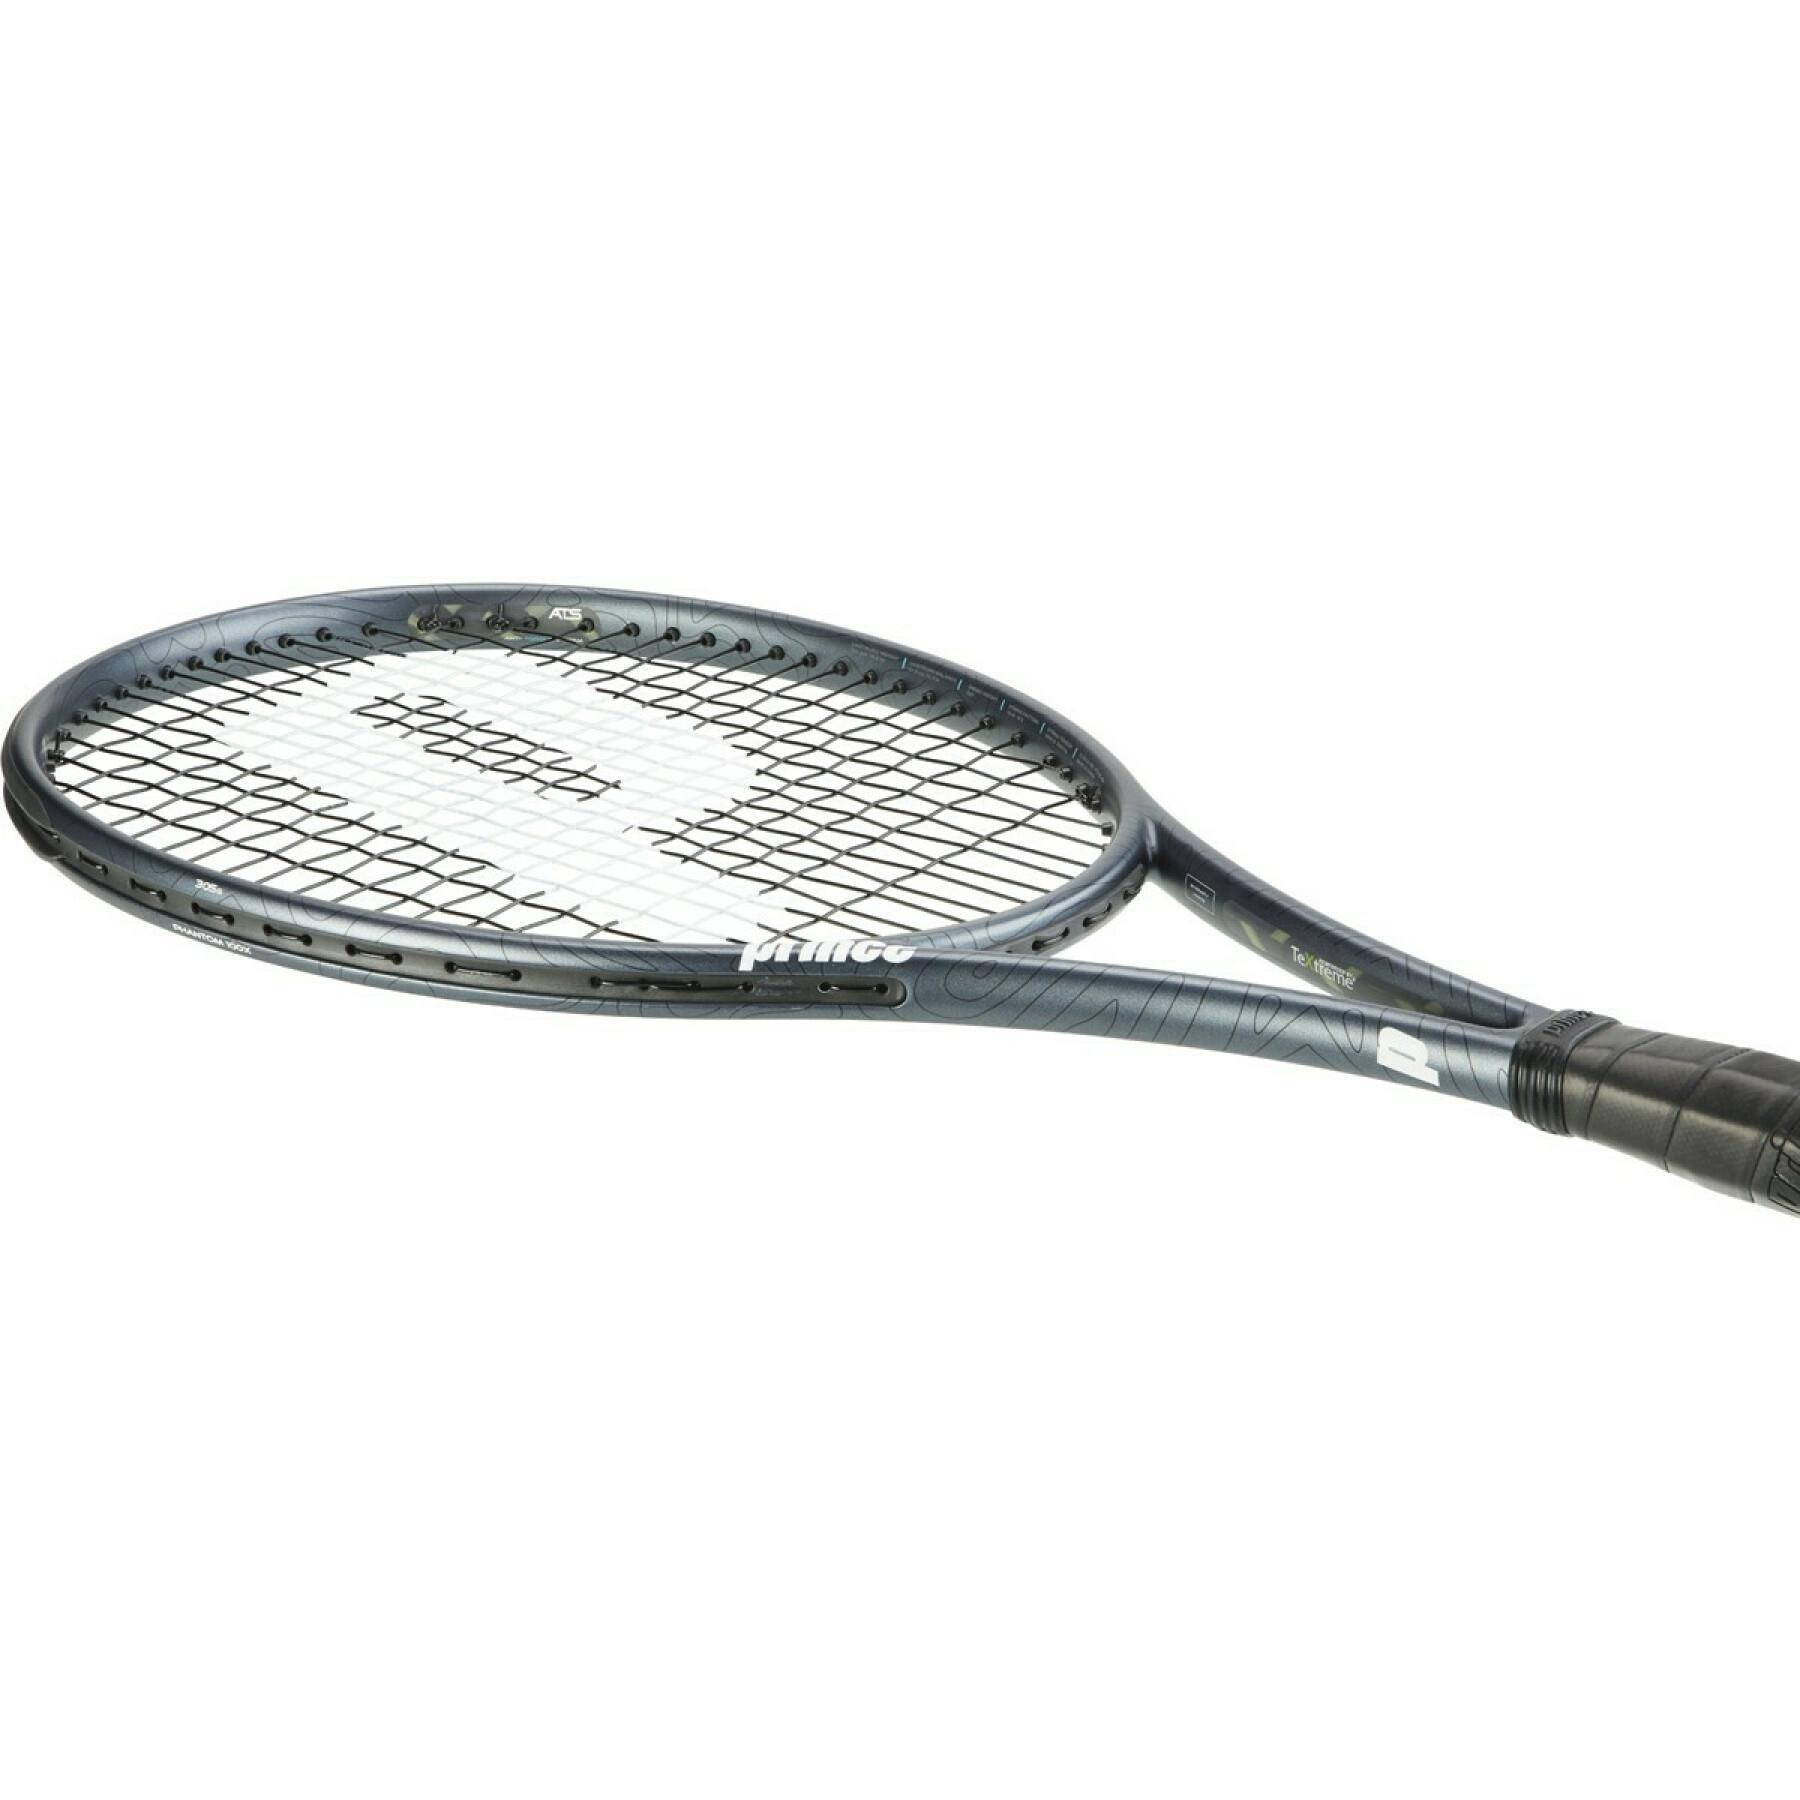 Racchetta da tennis Prince phantom 100x (290gr)